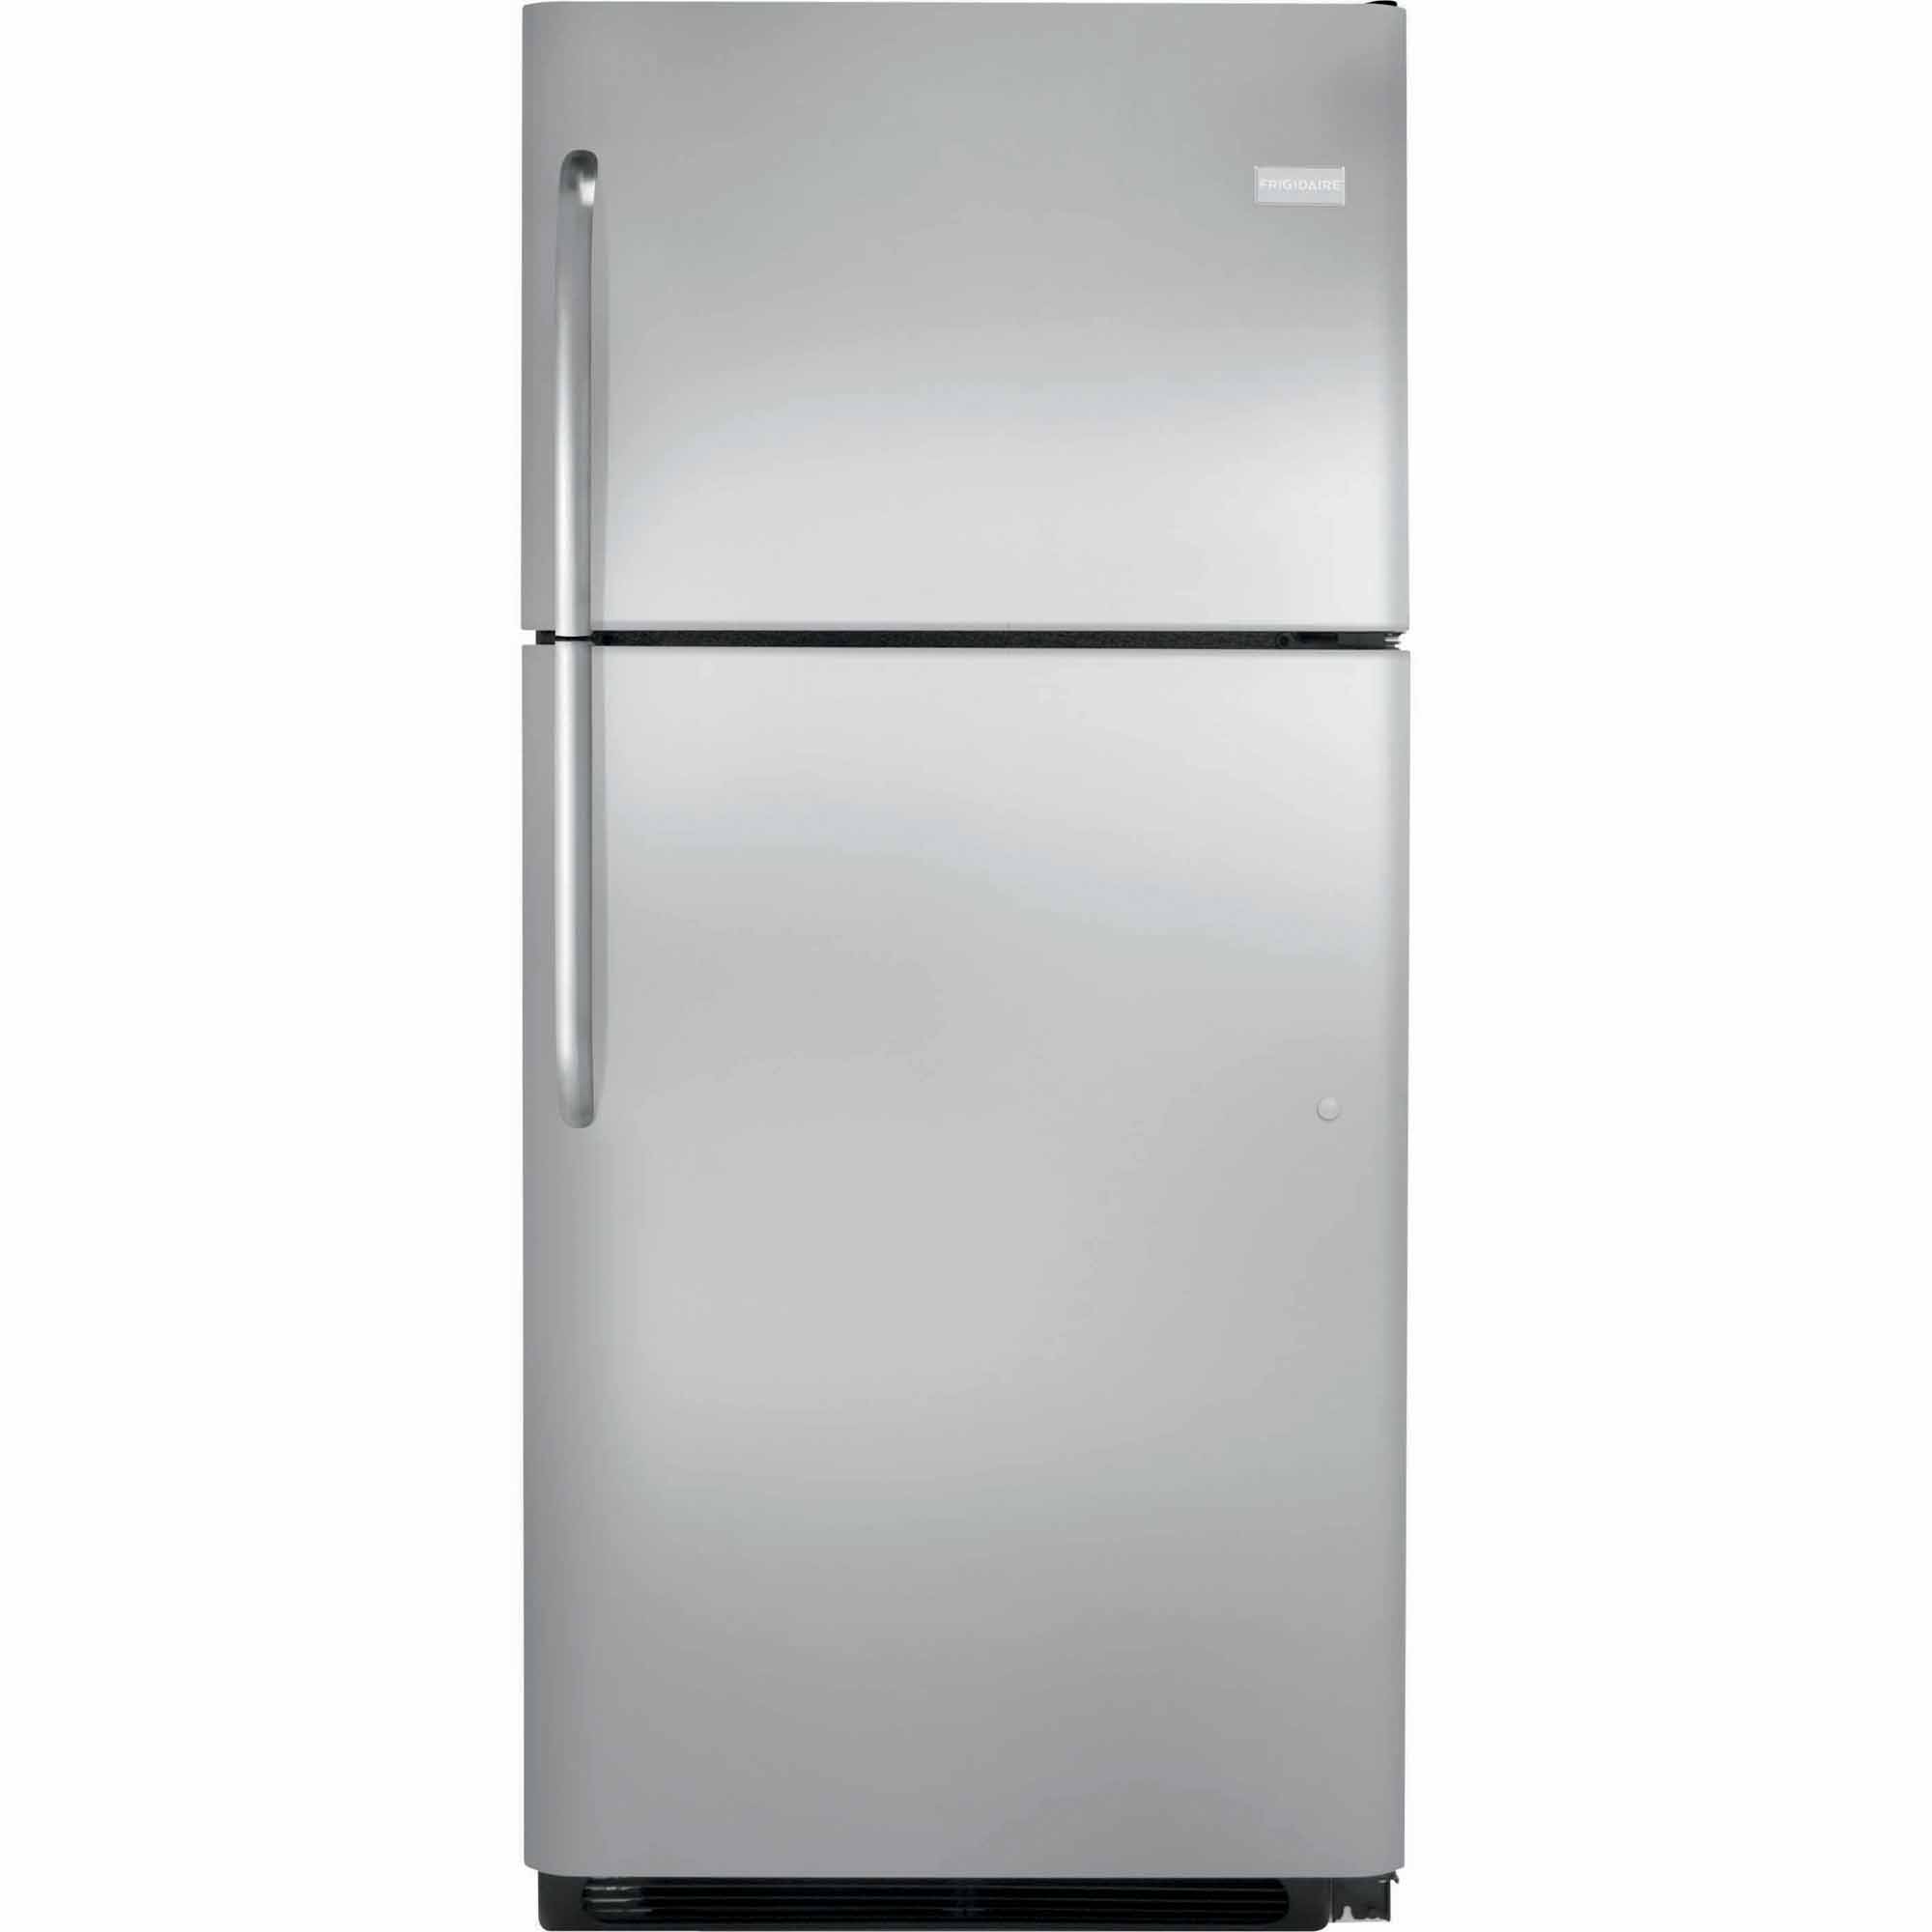 Frigidaire FFHT2131QS 20.5 cu. ft. Top Freezer Refrigerator - Stainless Frigidaire Refrigerator Stainless Steel Top Freezer